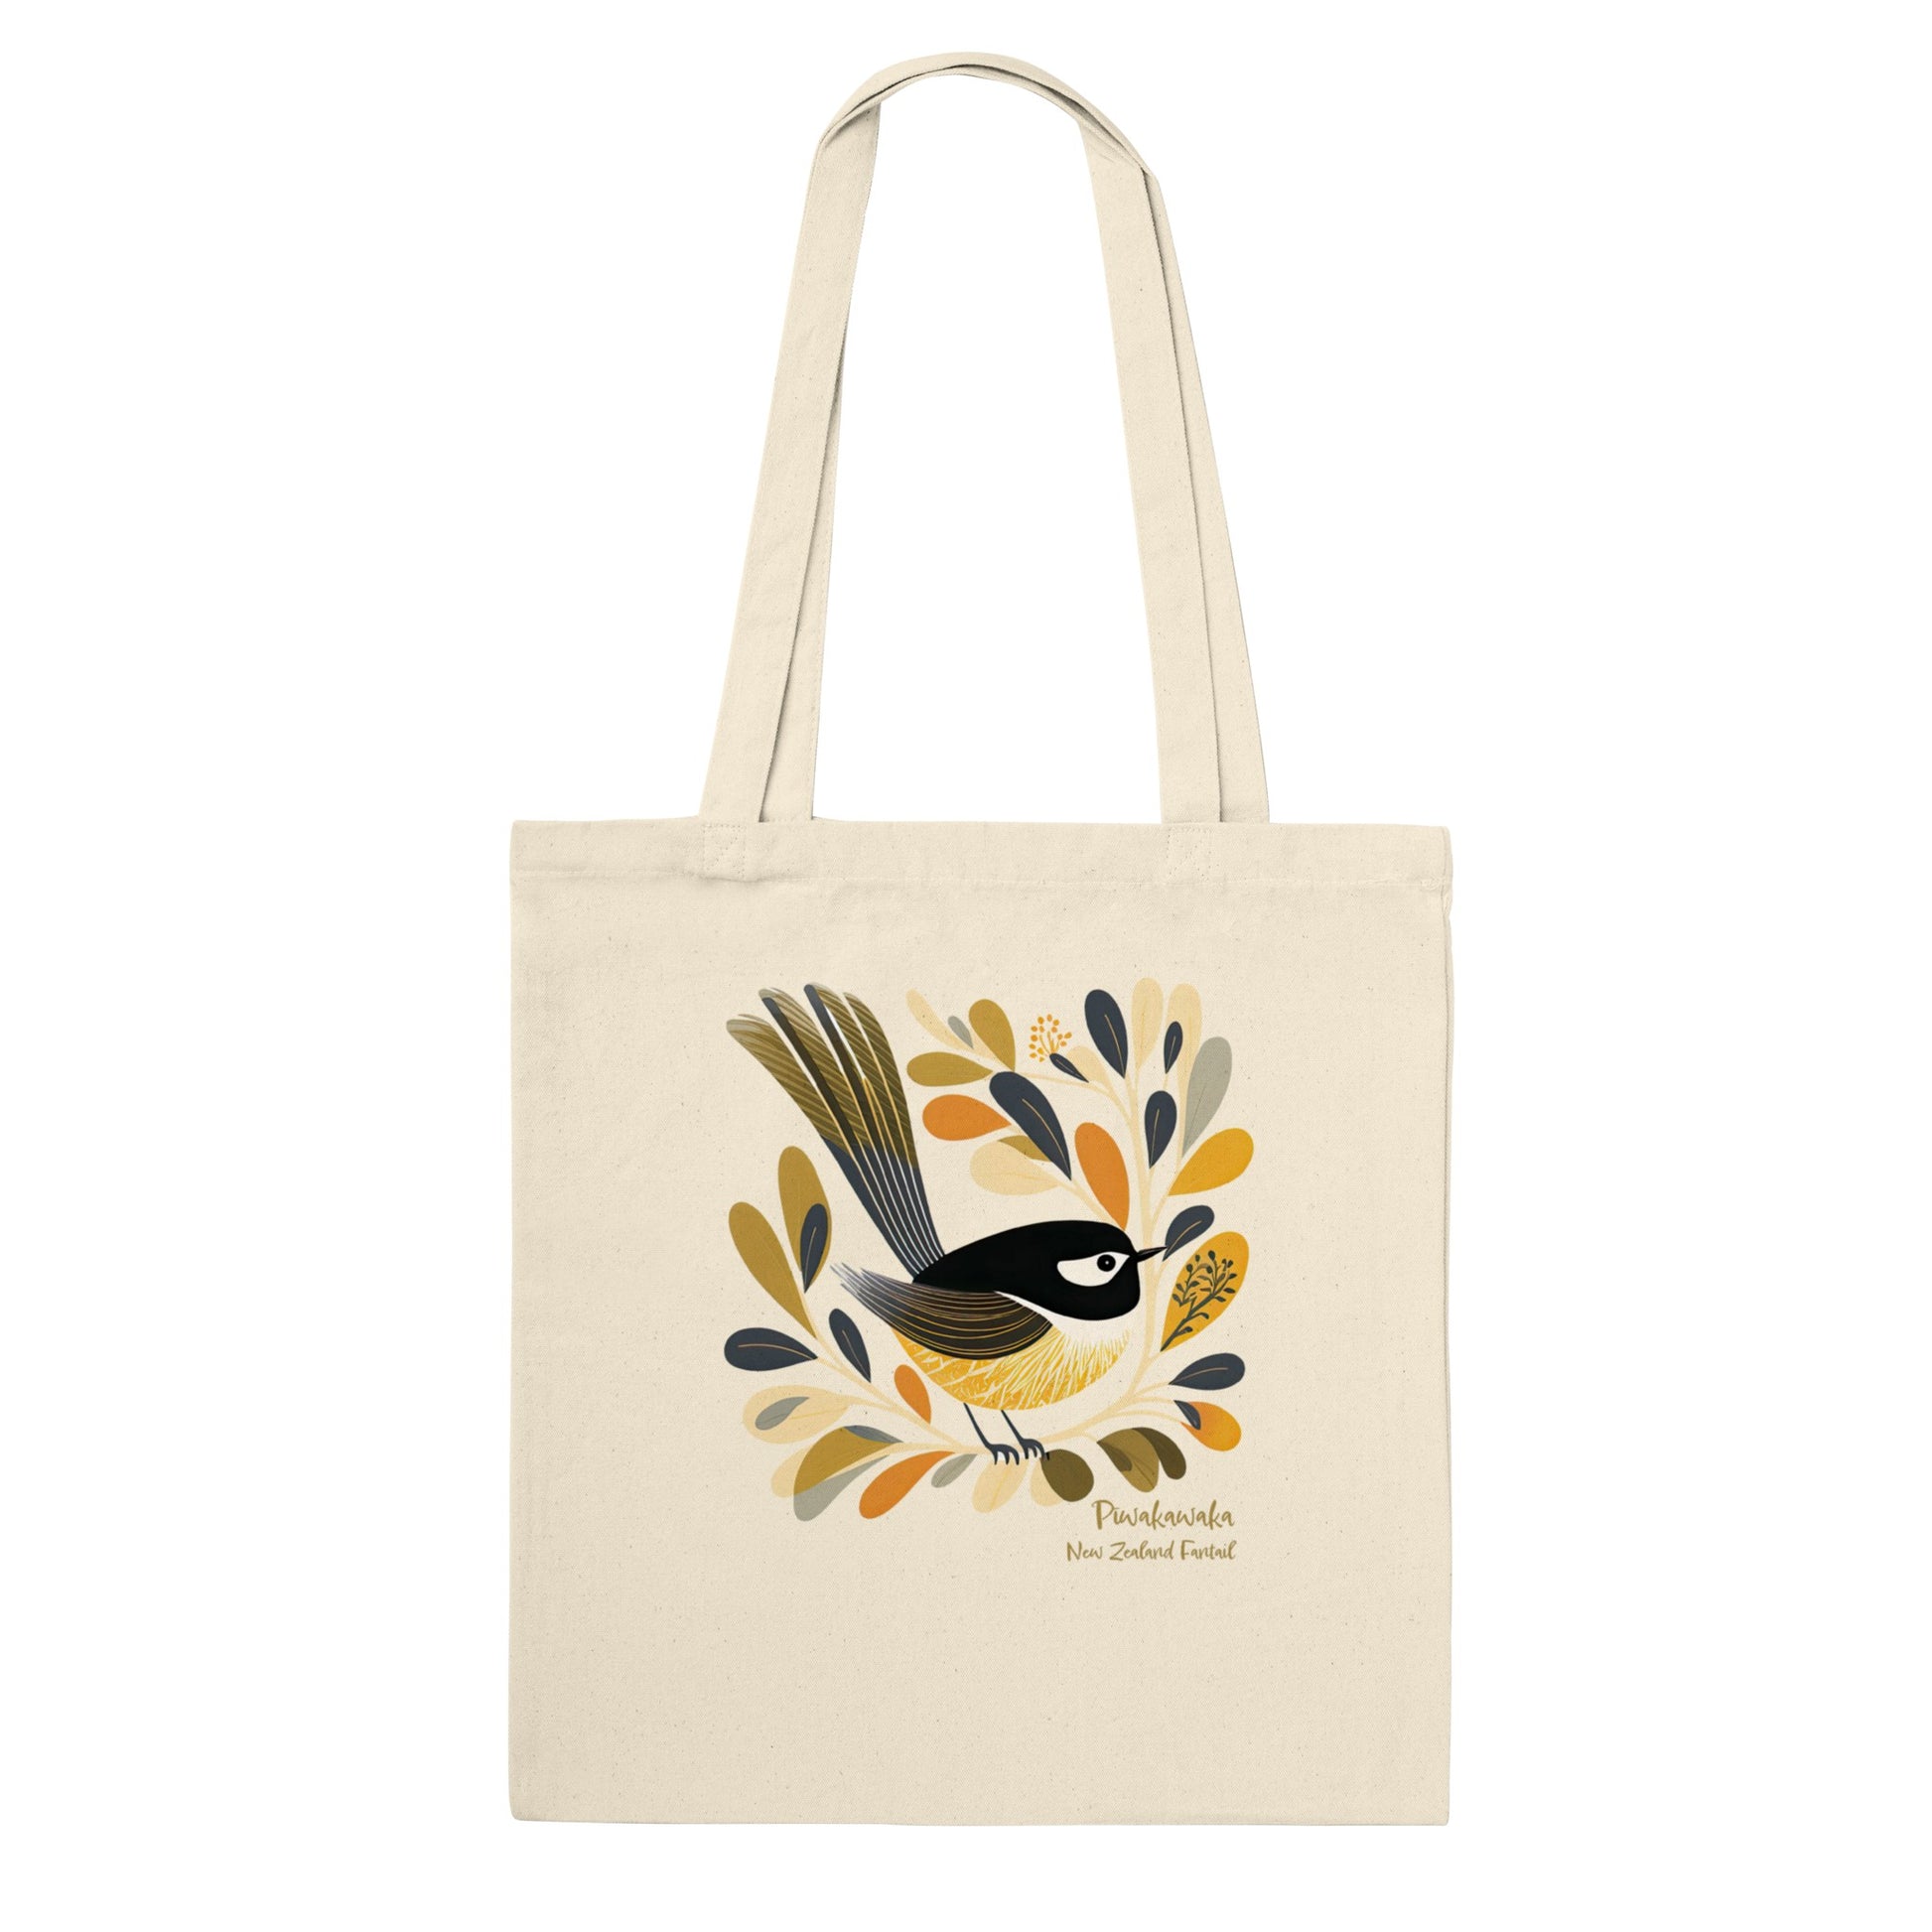 Natural tote bag with a New Zealand Fantail/pīwakawaka print